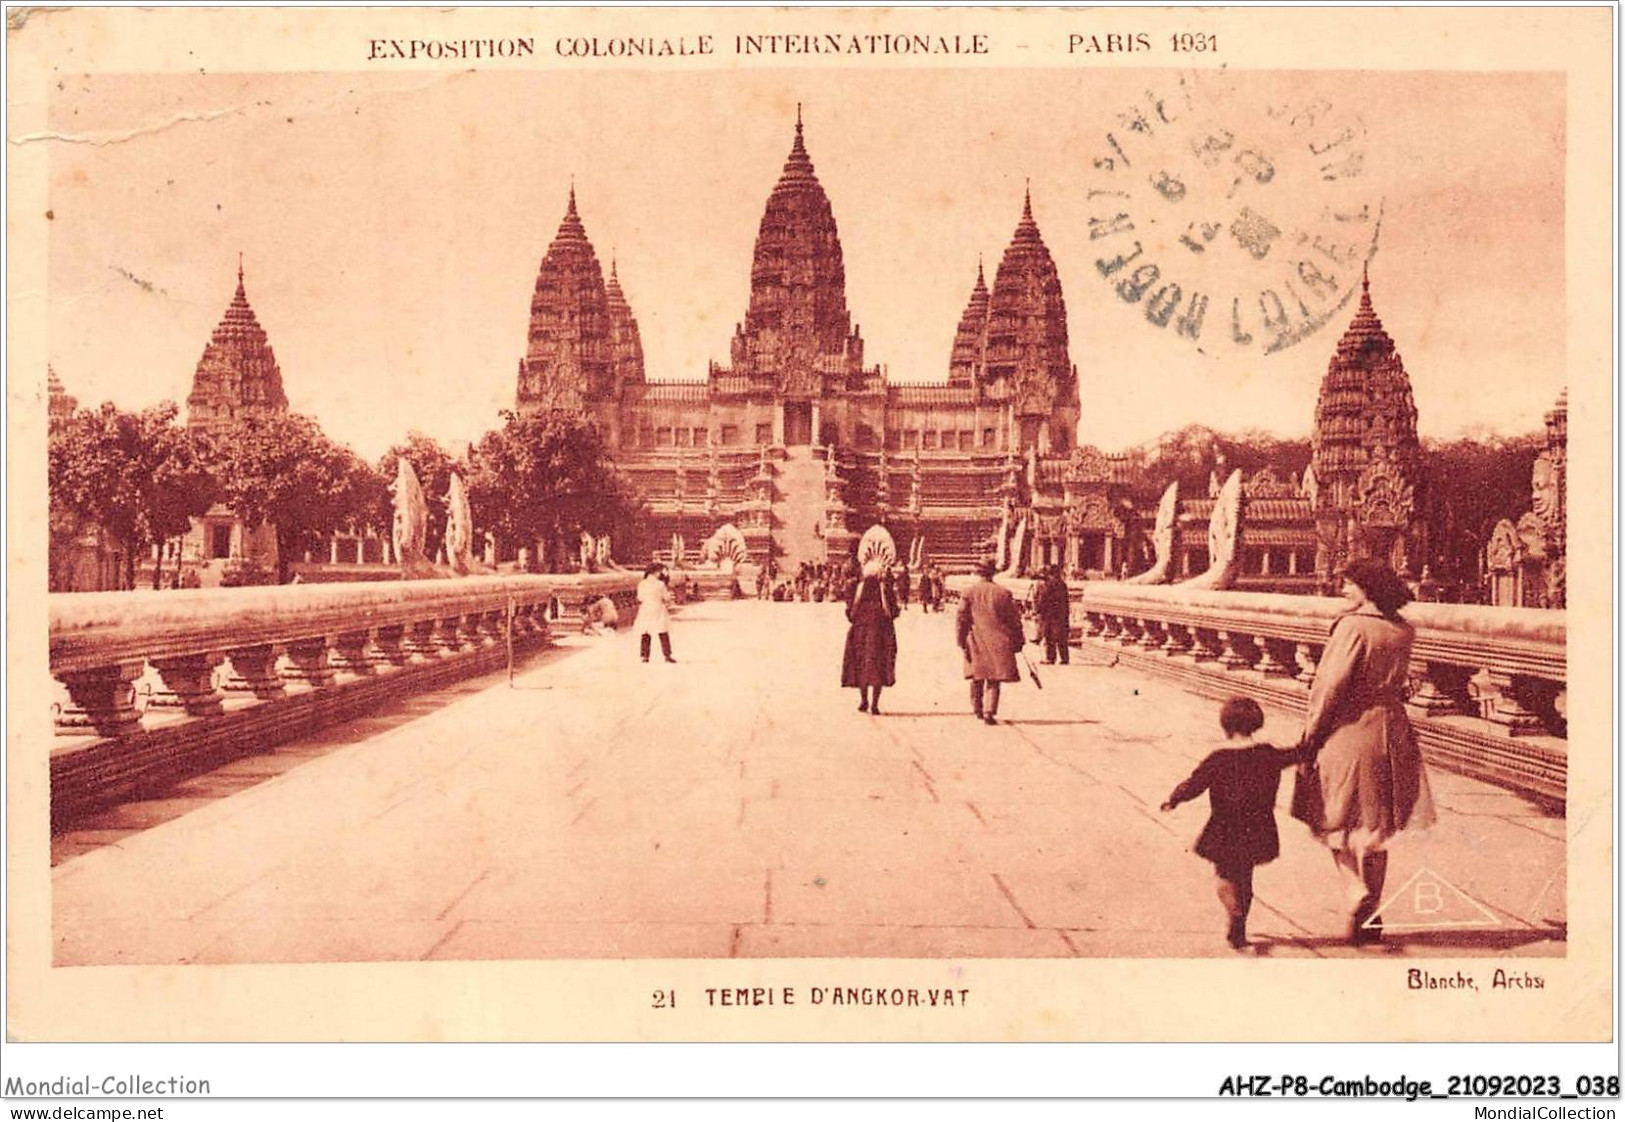 AHZP8-CAMBODGE-0702 - EXPOSITION COLONIALE INTERNATIONALE - PARIS 1931 - TEMPLE D'ANGKOR-VAT - Kambodscha